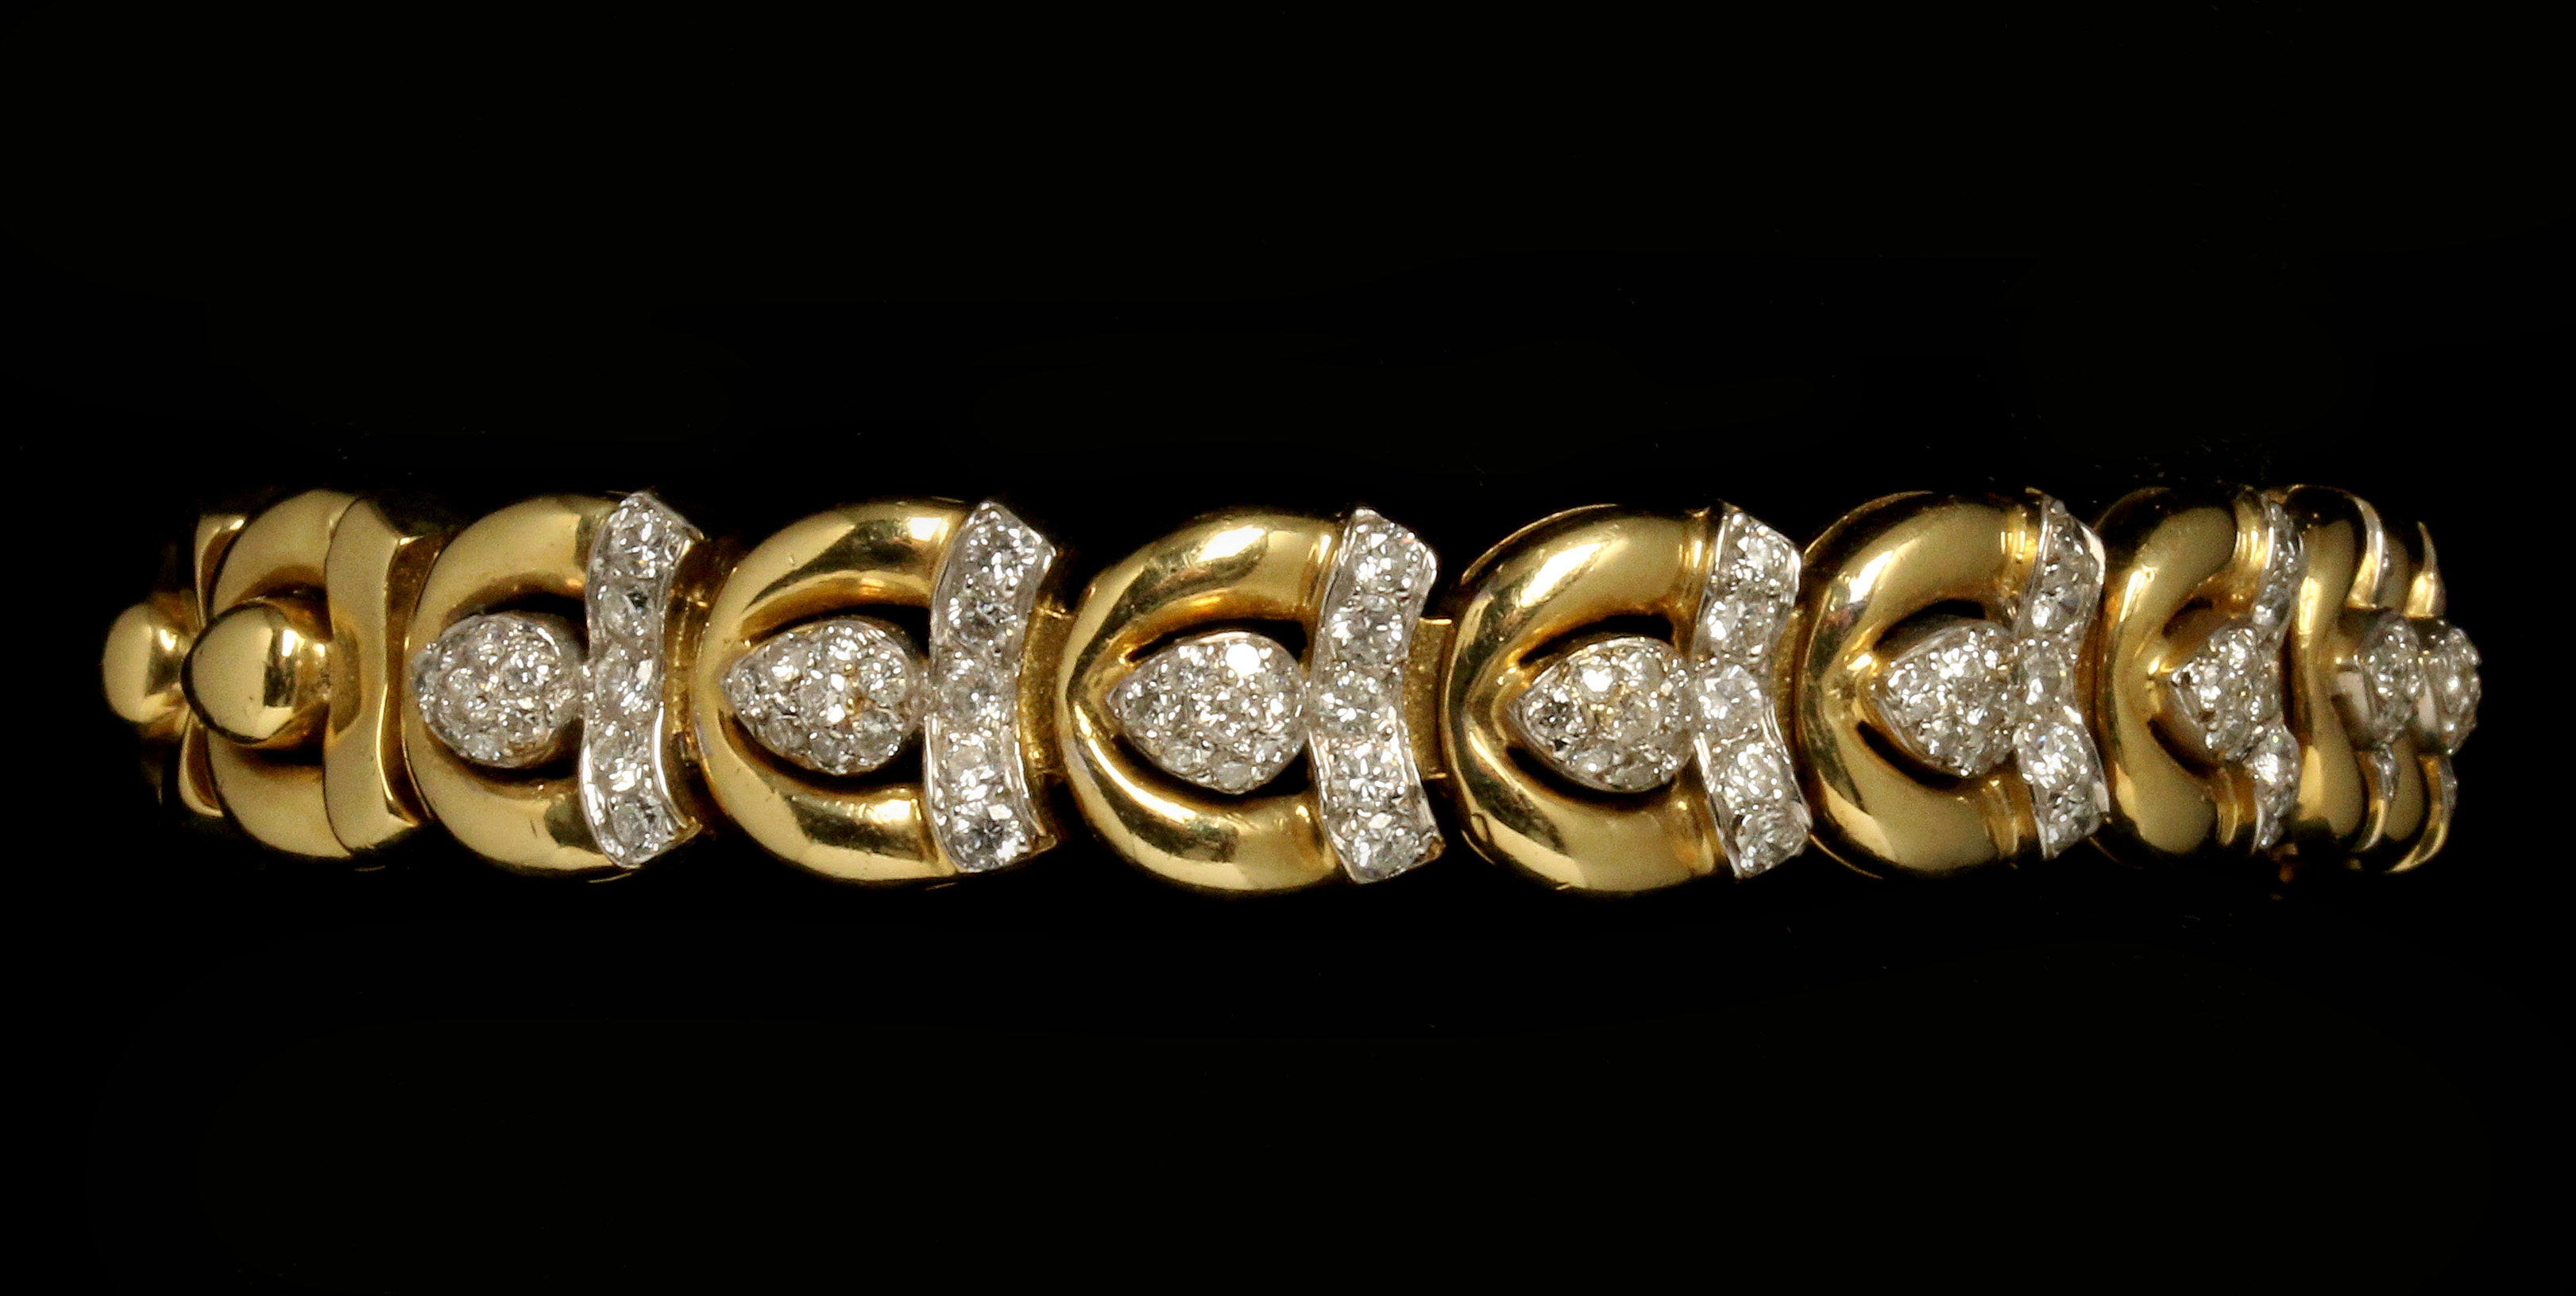 A LADIES 18K GOLD DIAMOND BRACELET APPROX. 2.72 CT